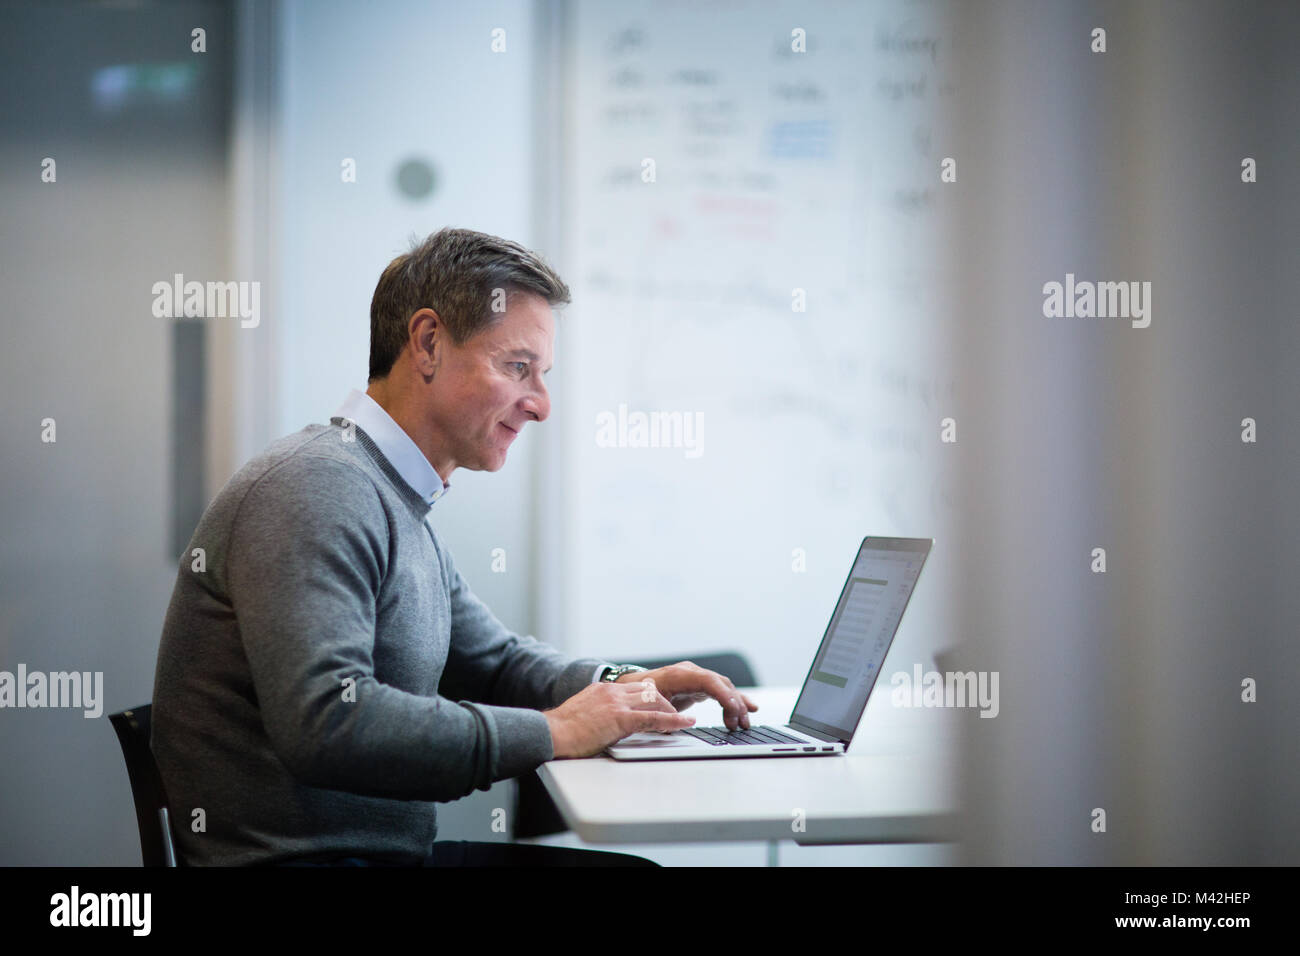 Businessman working on a presentation Stock Photo